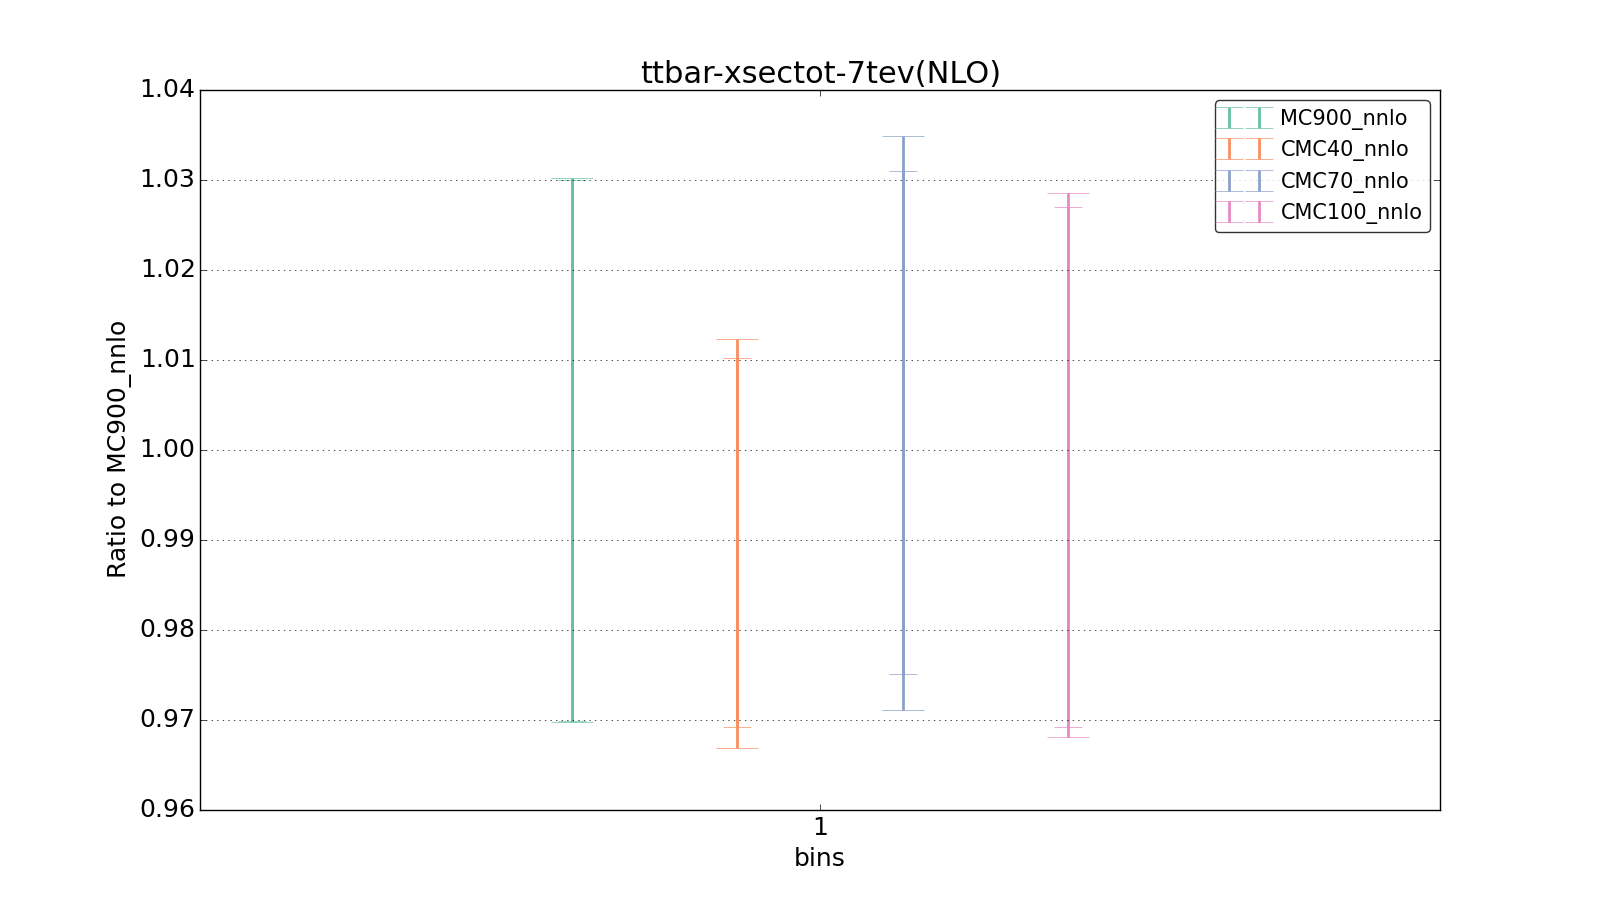 figure plots/CMCpheno/group_0_ciplot_ttbar-xsectot-7tev(NLO).png